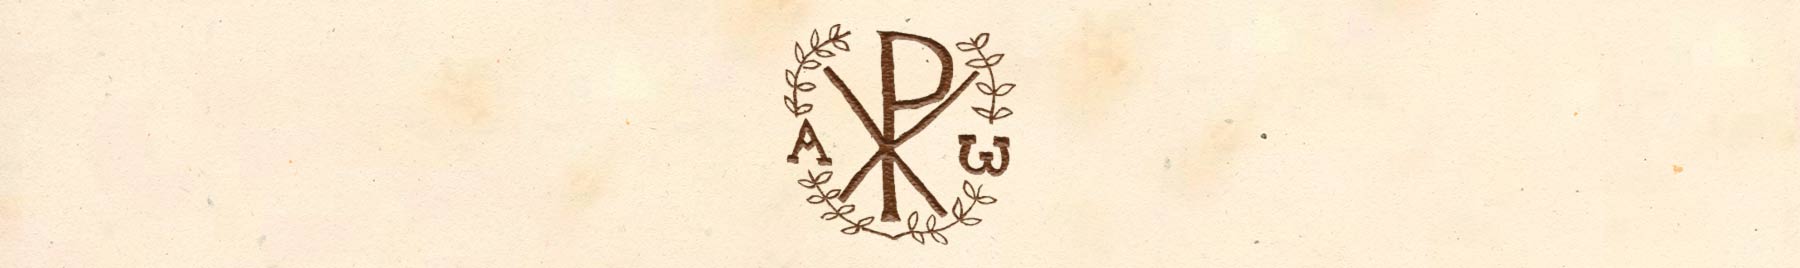 dove and cross symbol